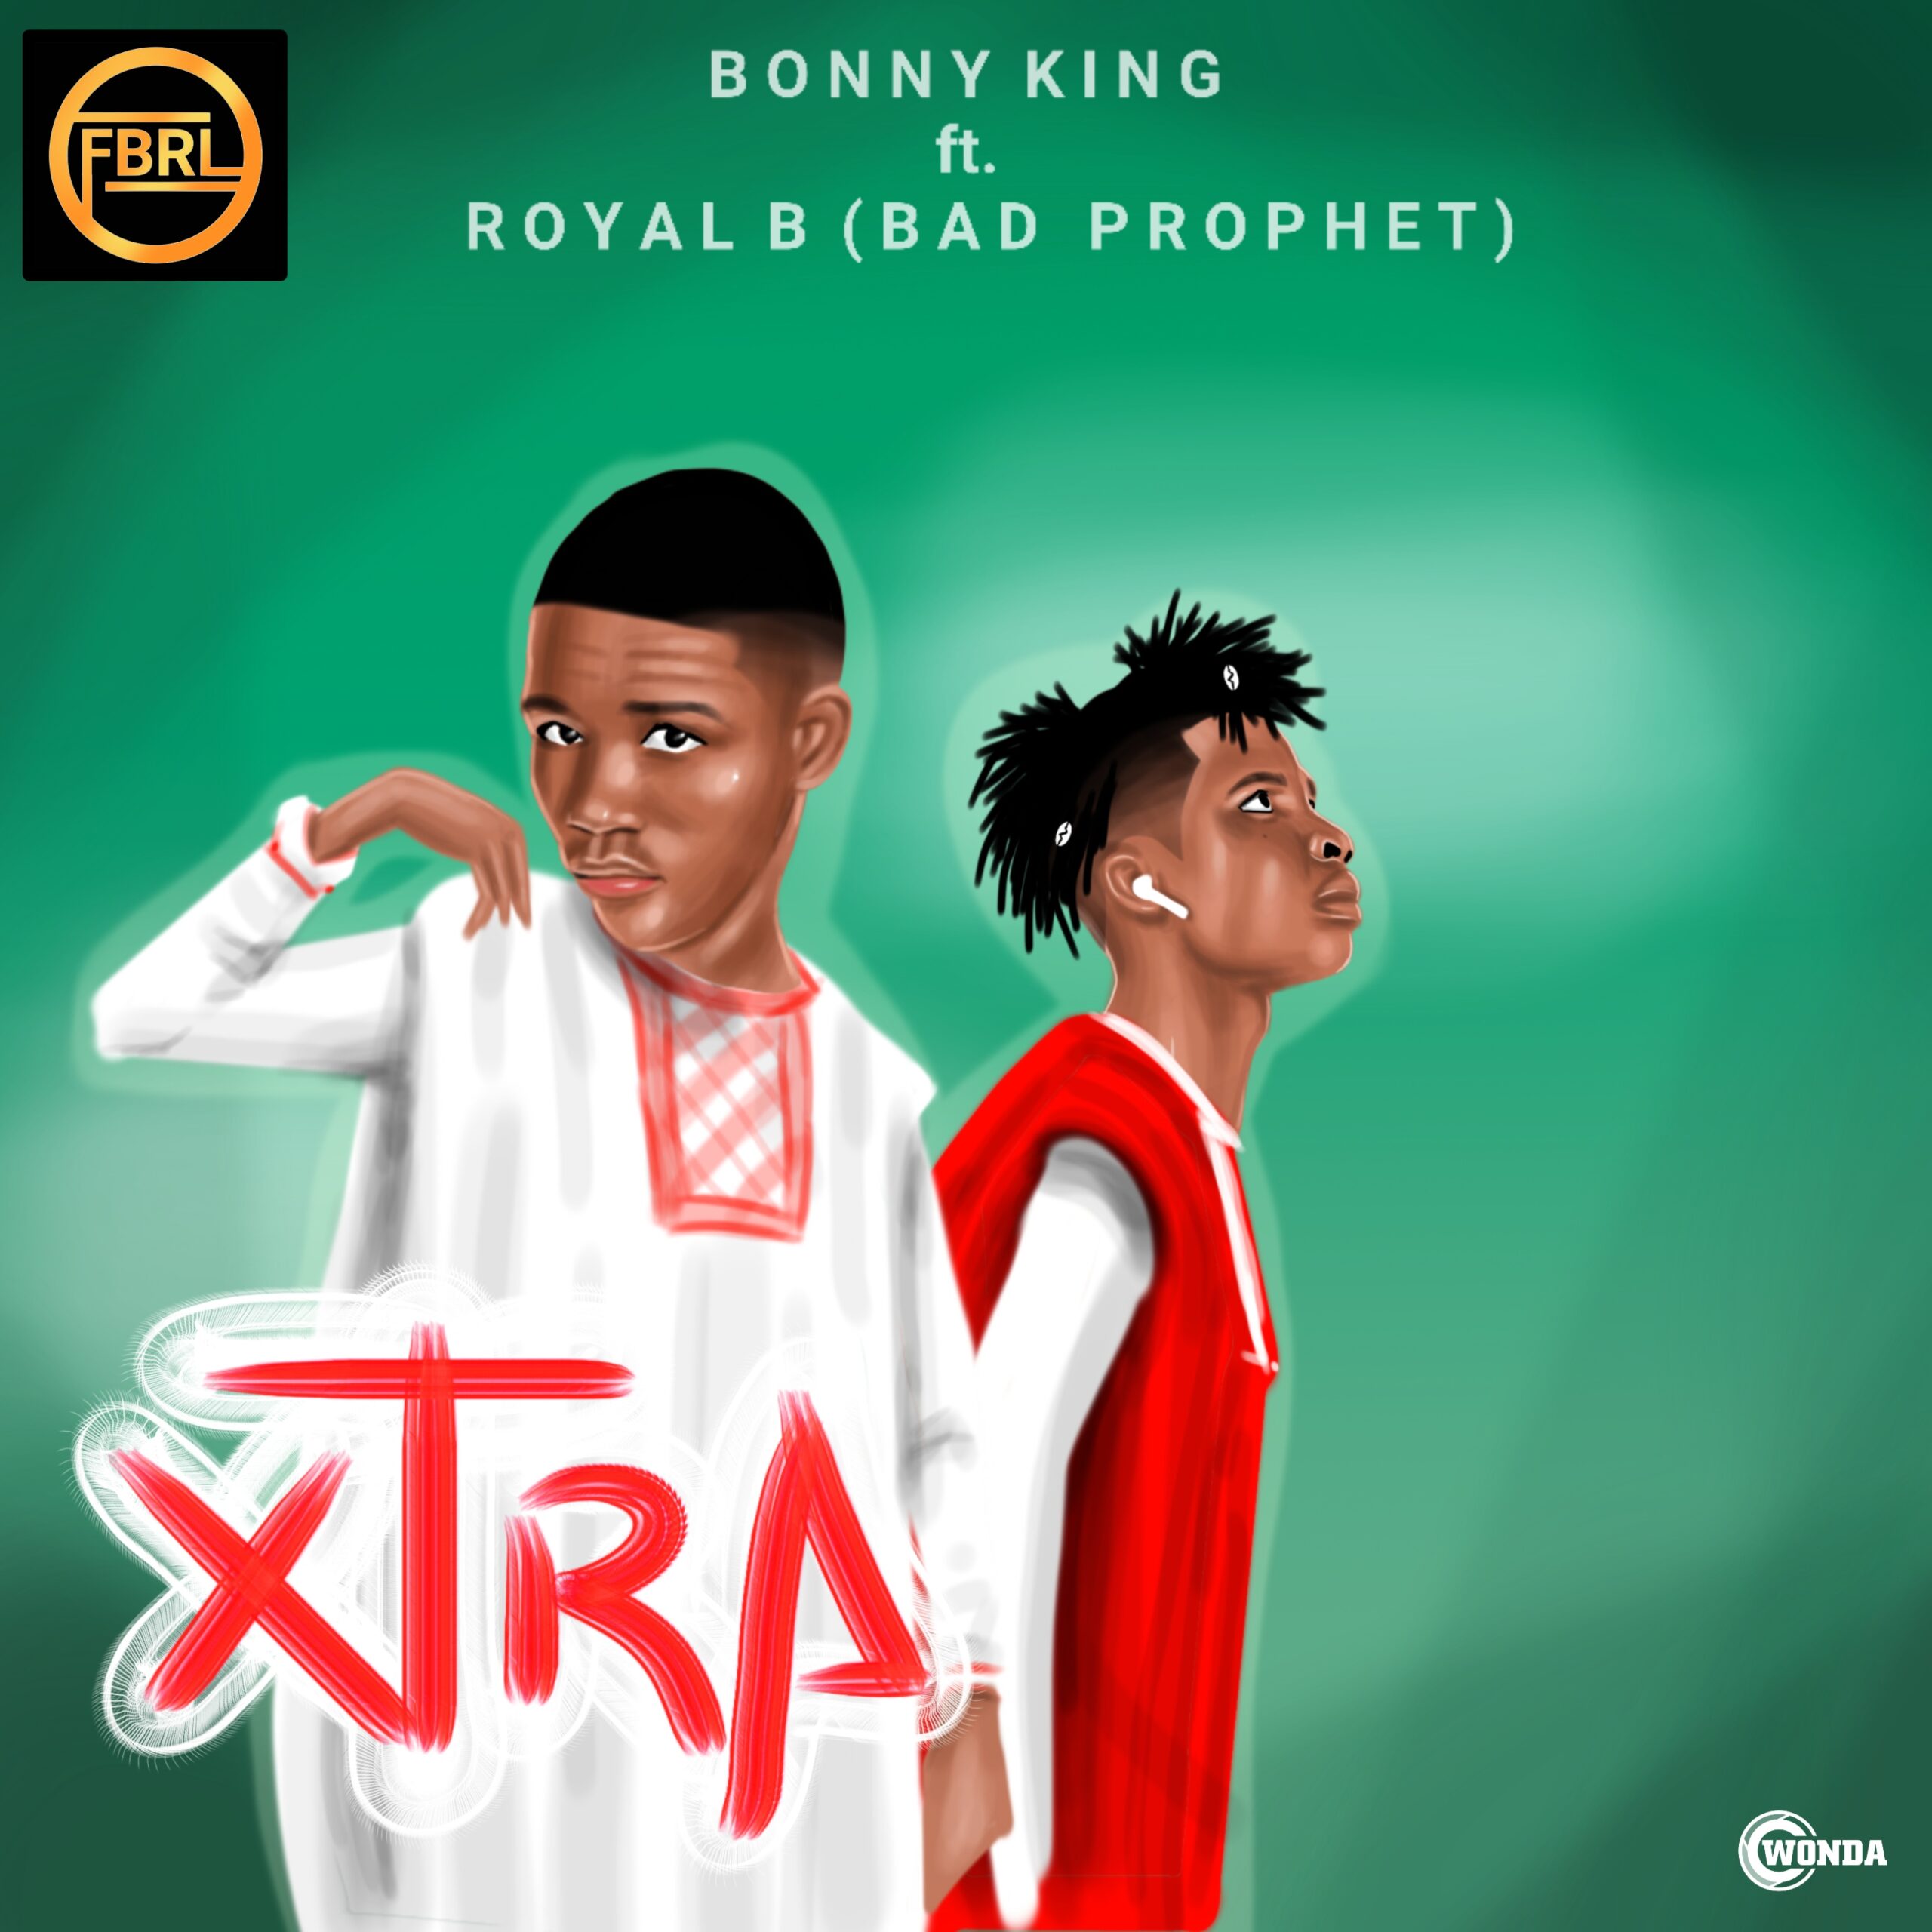 DOWNLOAD MUSIC: Bonny King ft Royal B – Xtra